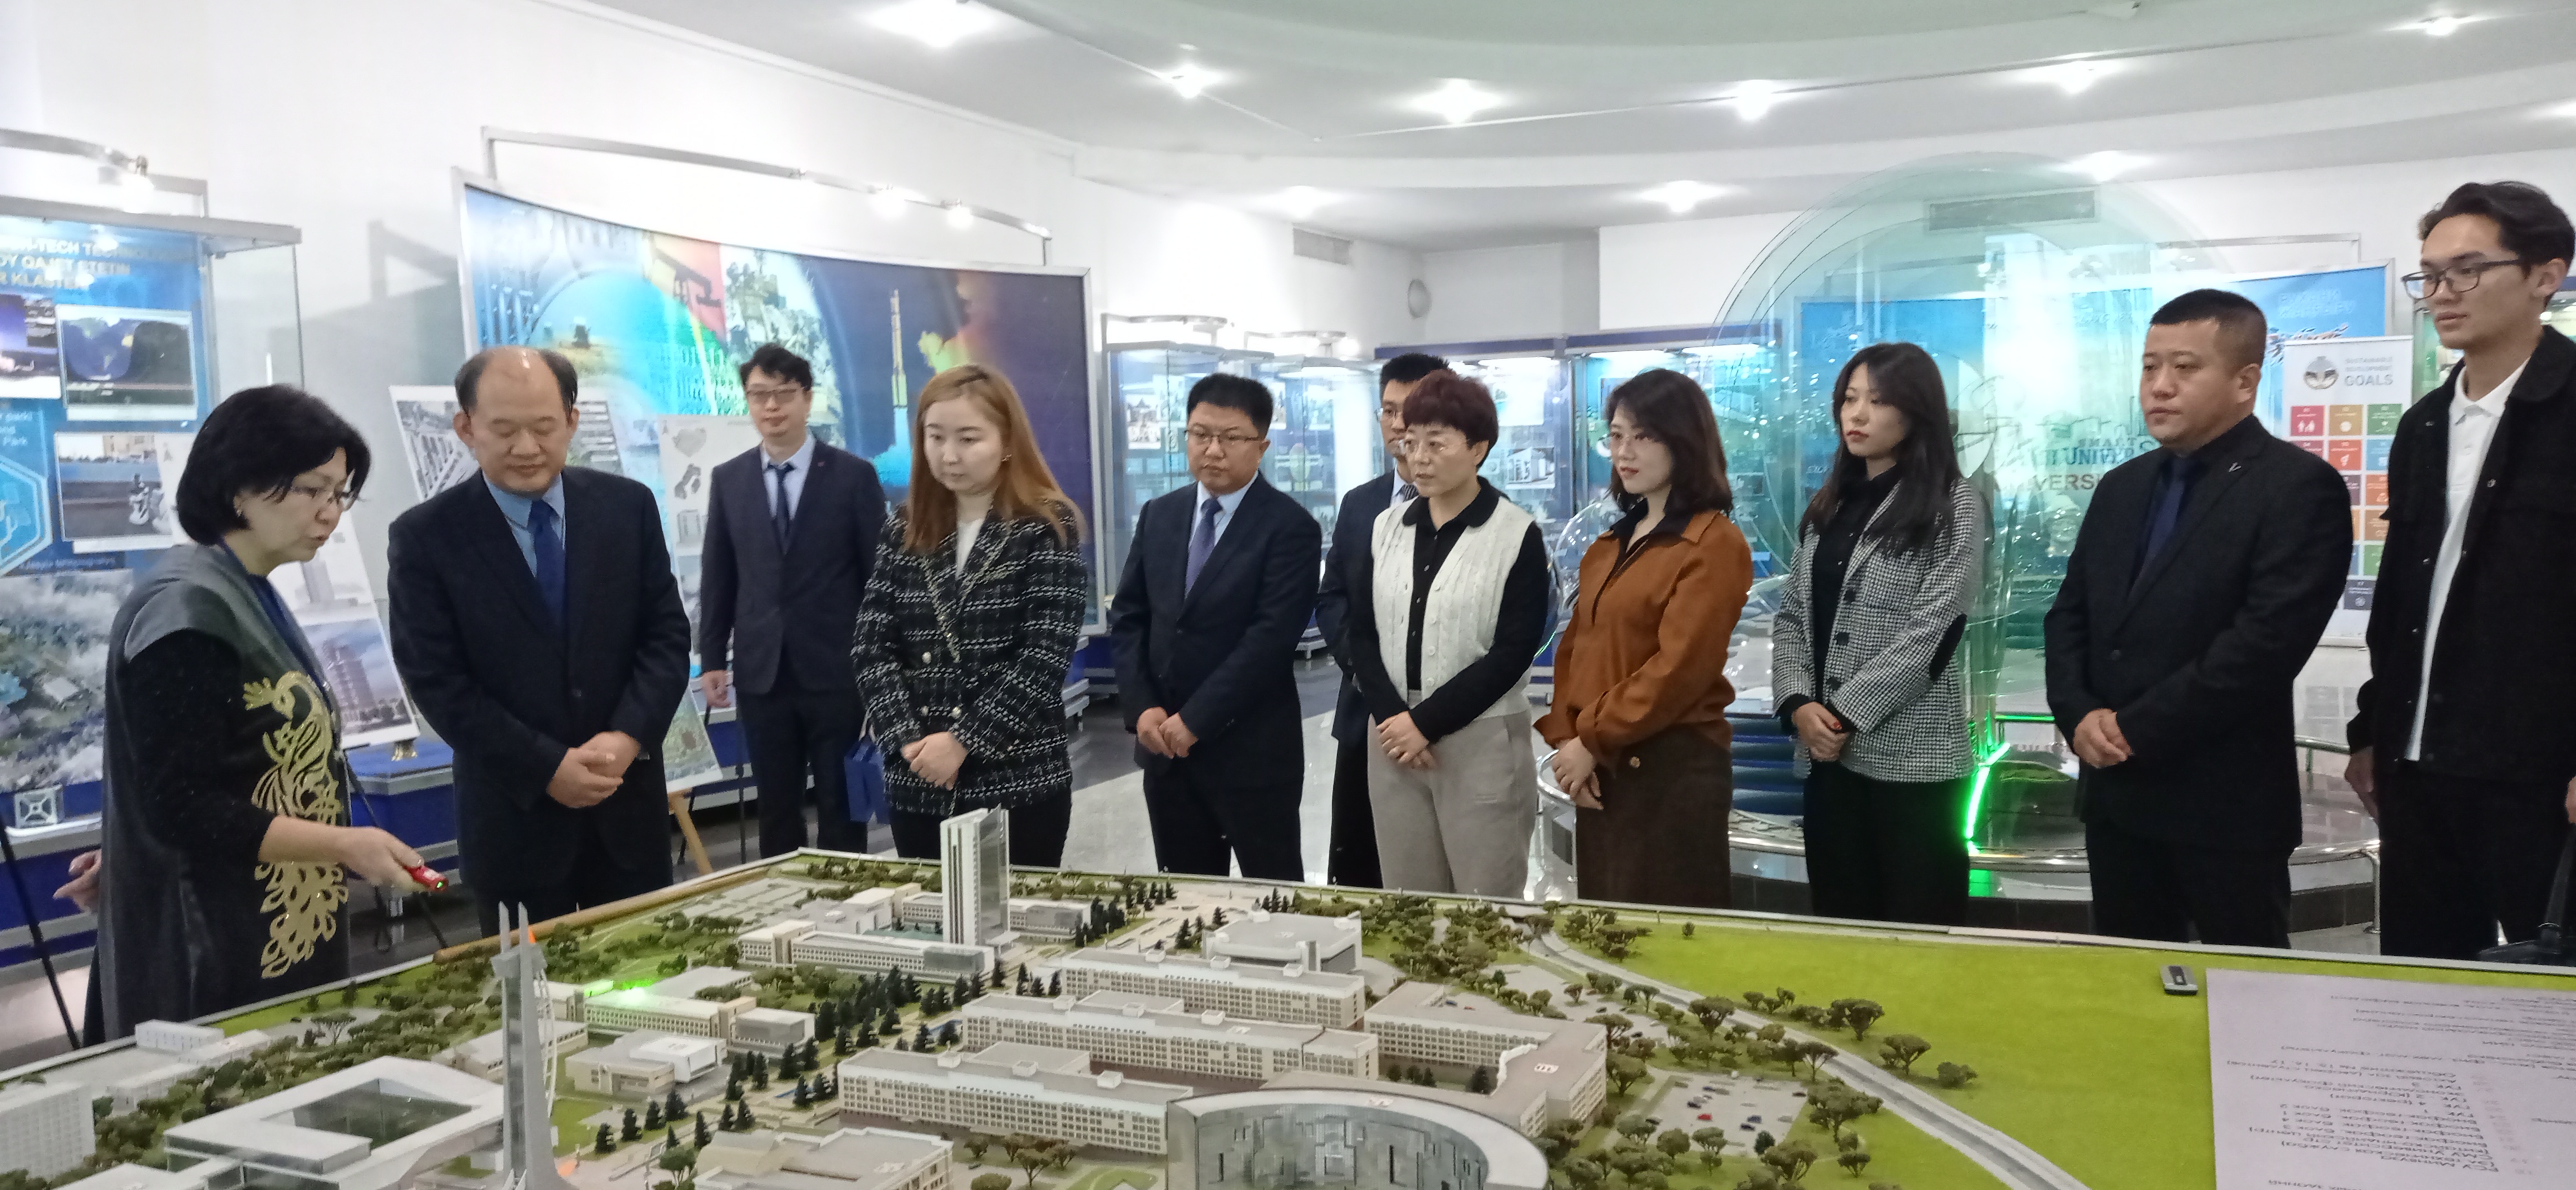 KazNU will strengthen work with Shandong University of Technology